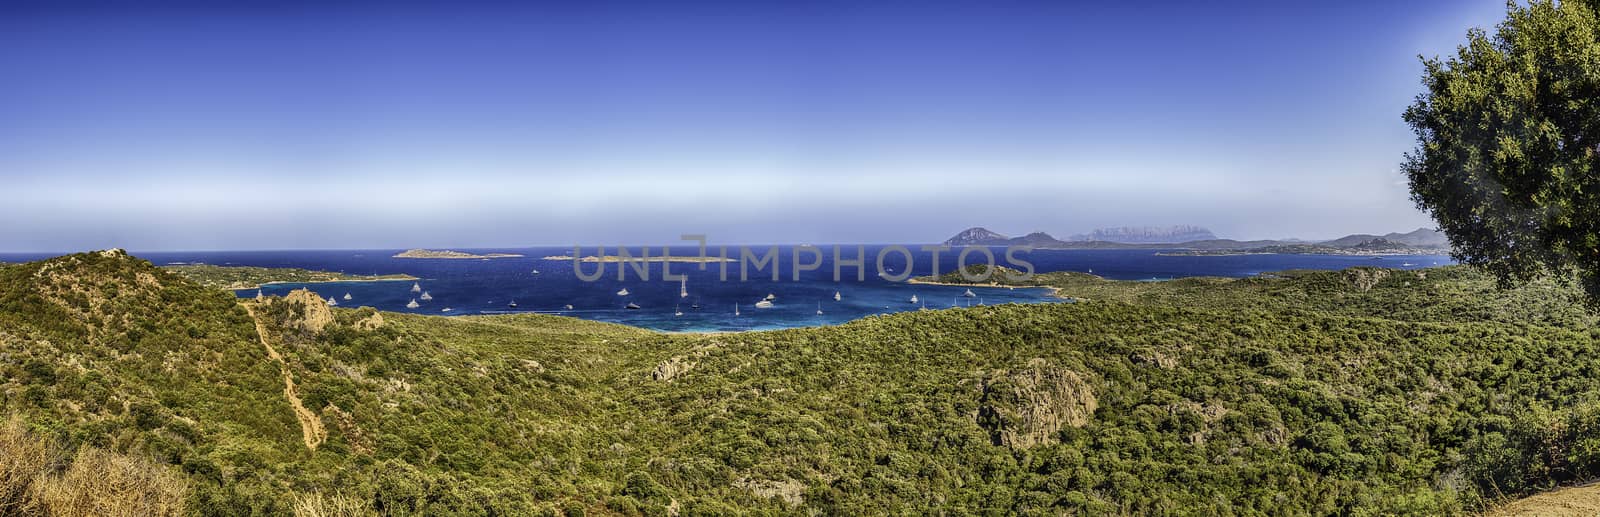 Panoramic view in Costa Smeralda, Sardinia, Italy by marcorubino